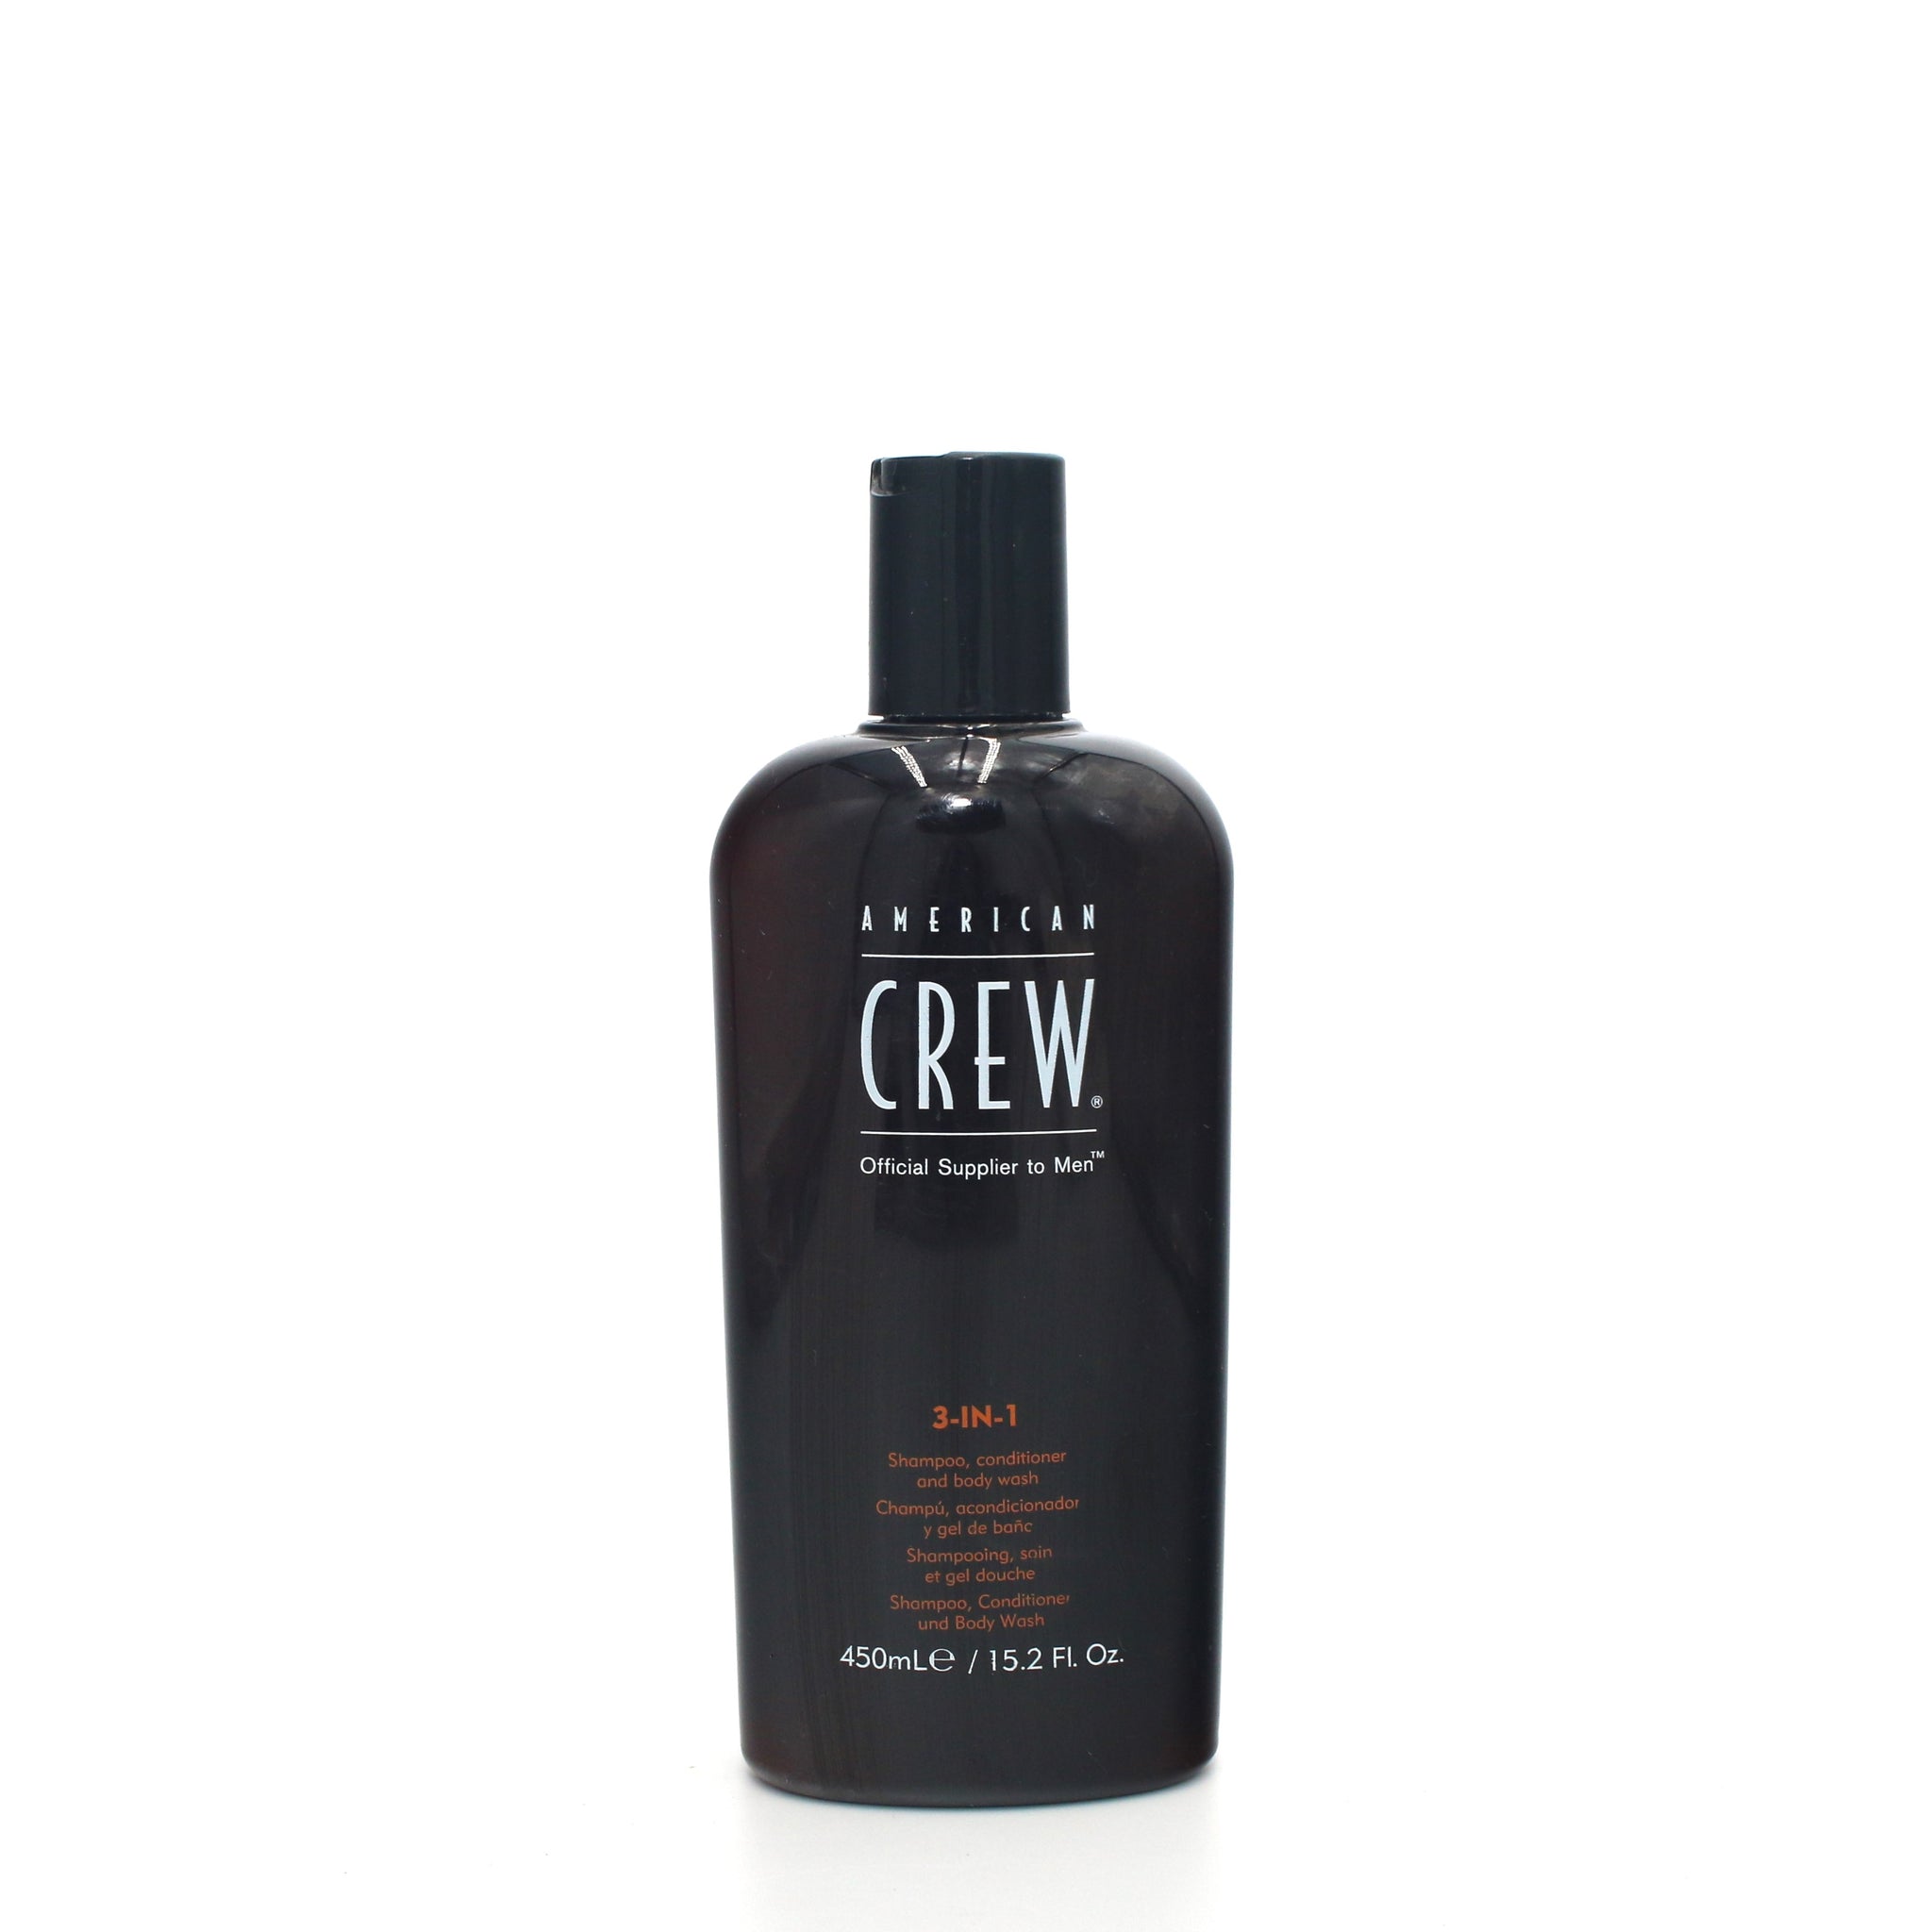 AMERICAN CREW 3-in-1 Shampoo, Conditioner, and Body Wash 15.2 oz